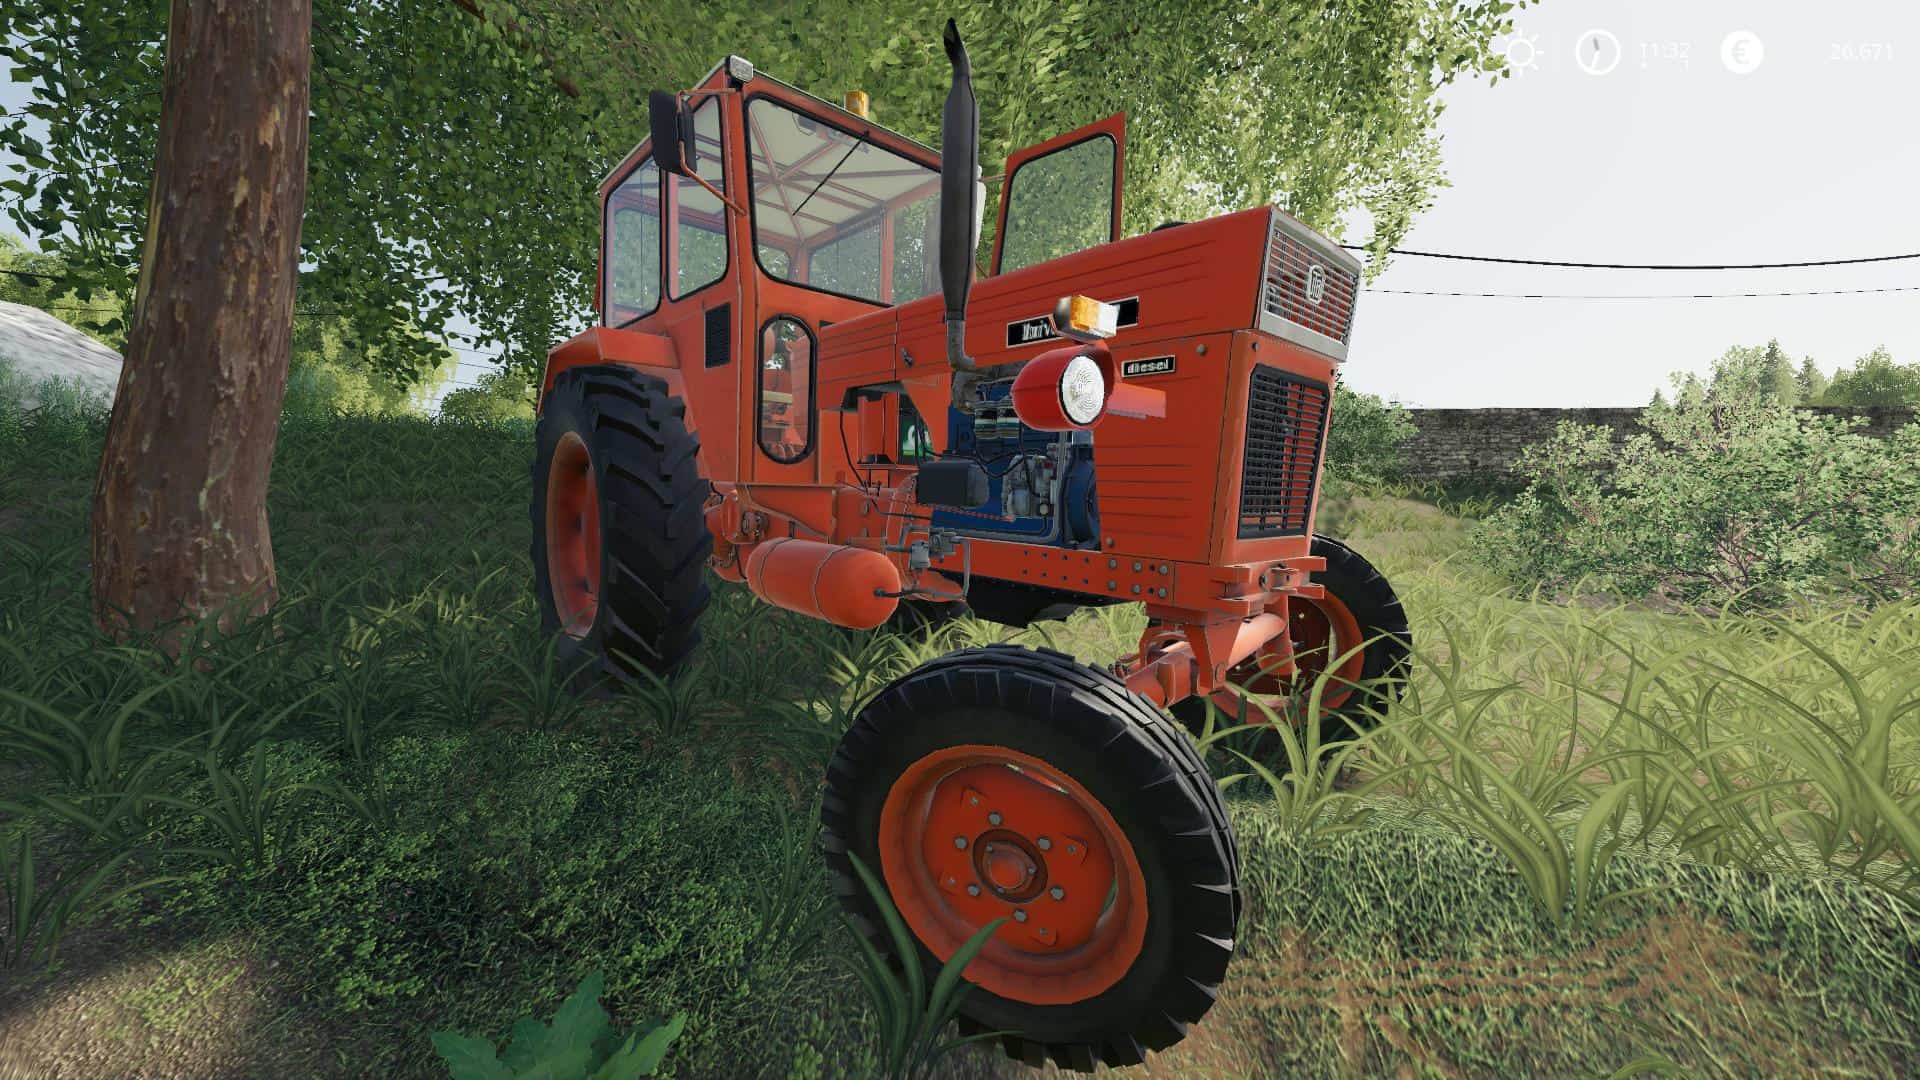 farming simulator 19 tractor torque